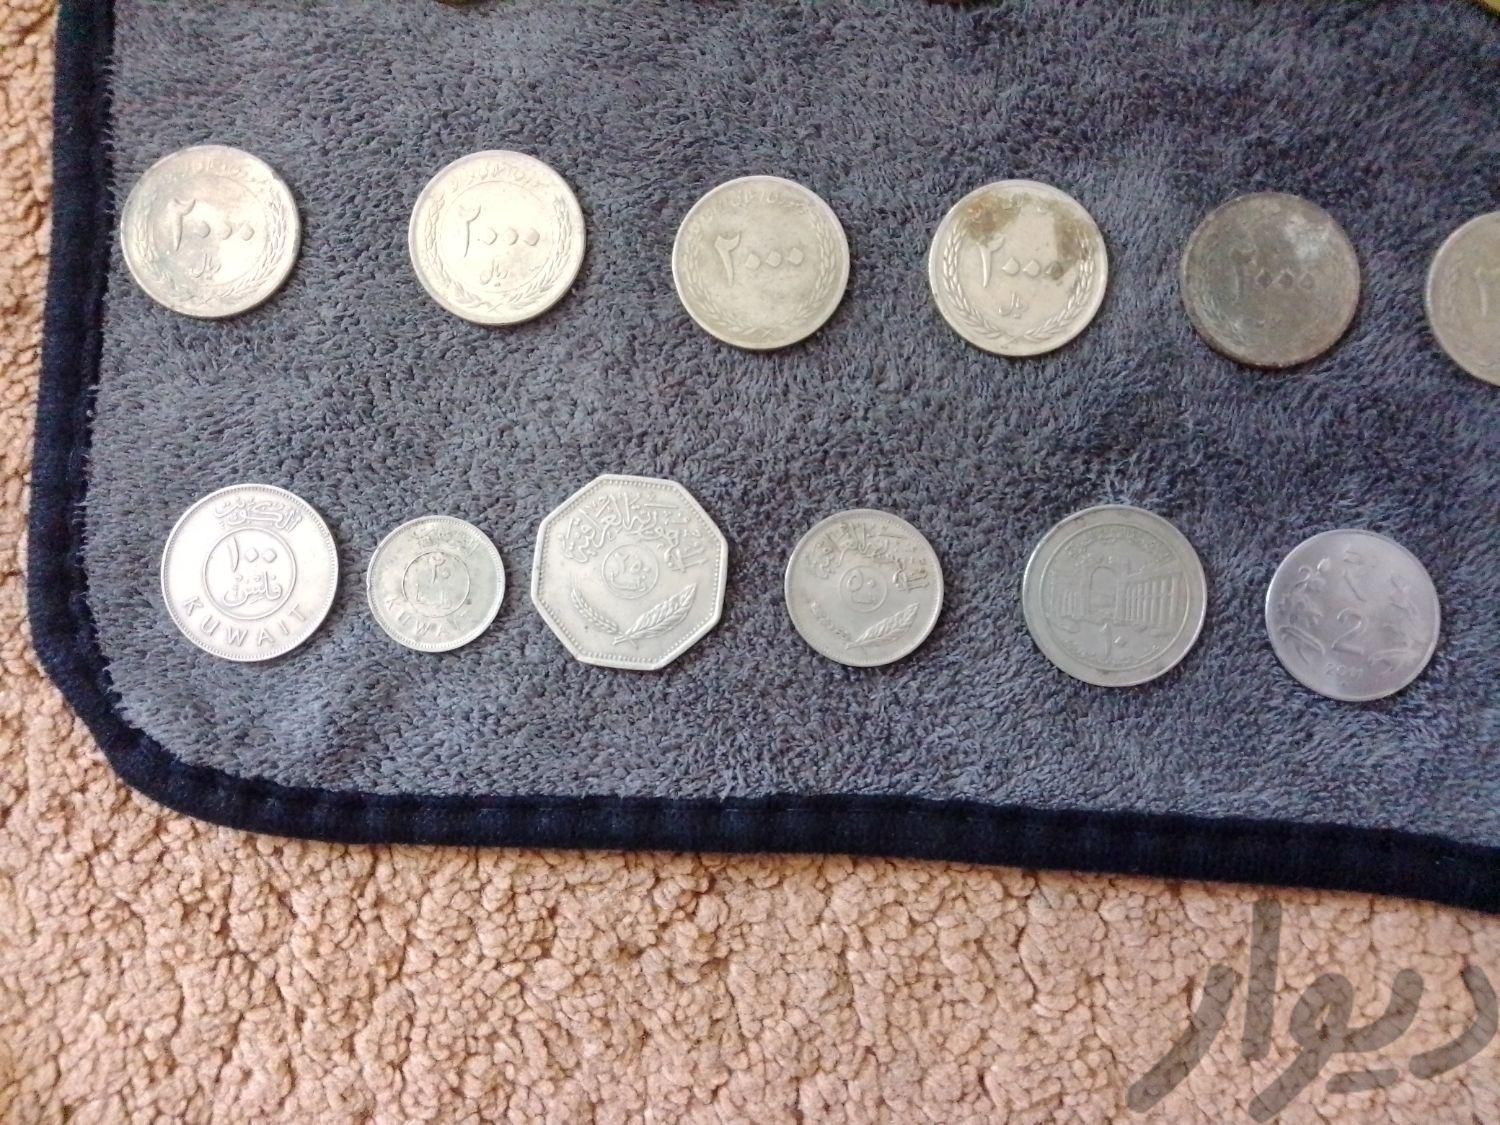 سکه اسکناس پول قدیمی|سکه، تمبر و اسکناس|اهواز, کیانشهر|دیوار